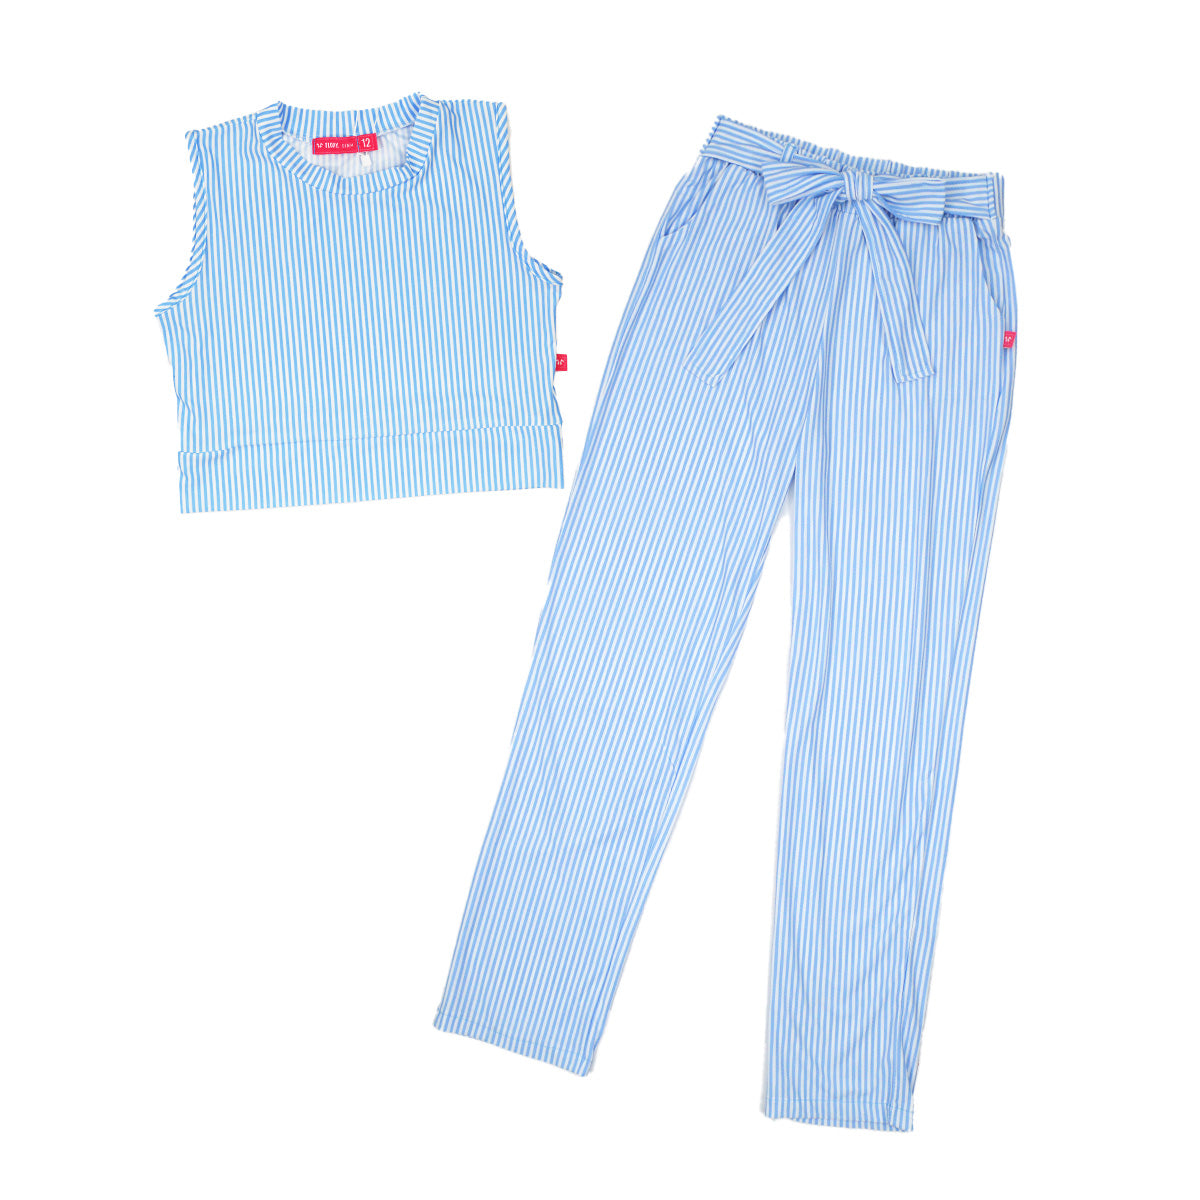 Conjunto blusa pantalón estampado de rayas juvenil FLORY COJU0001